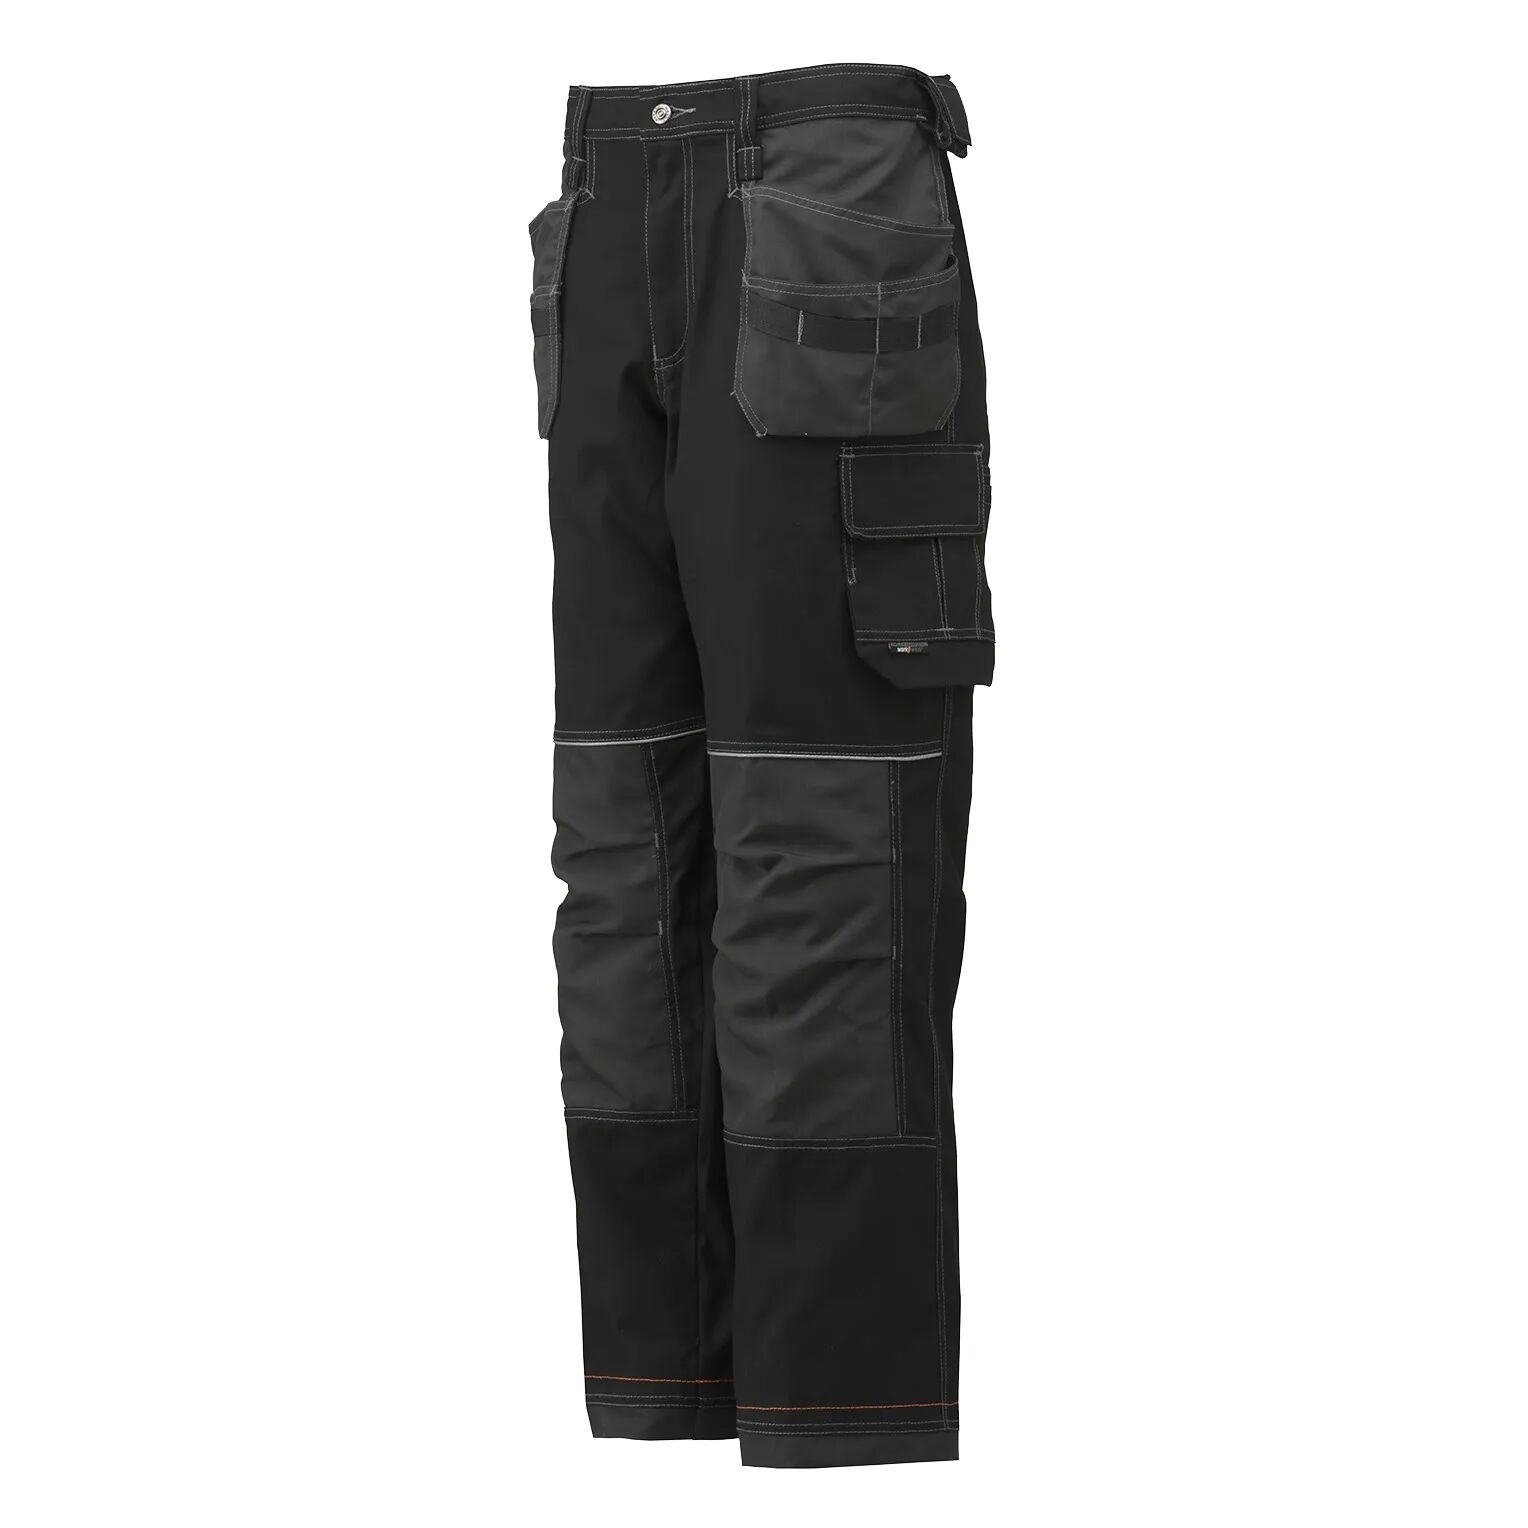 HH Workwear Helly Hansen WorkwearChelsea Durable Reflective Construction Pants Black 38/36